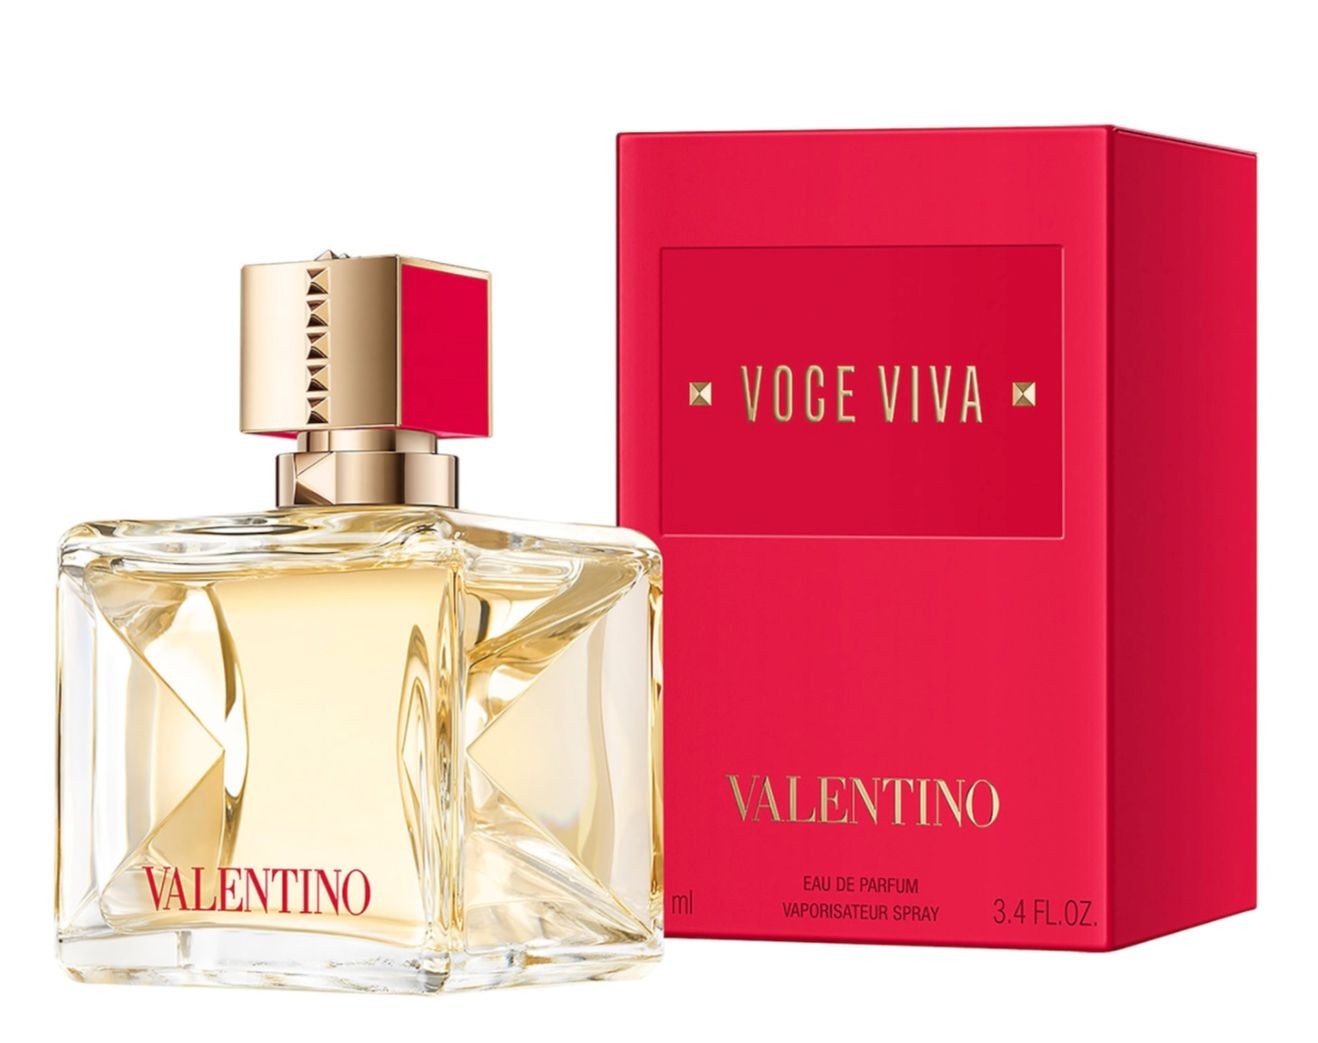 Image of Valentino Voce Viva - Eau de Parfum